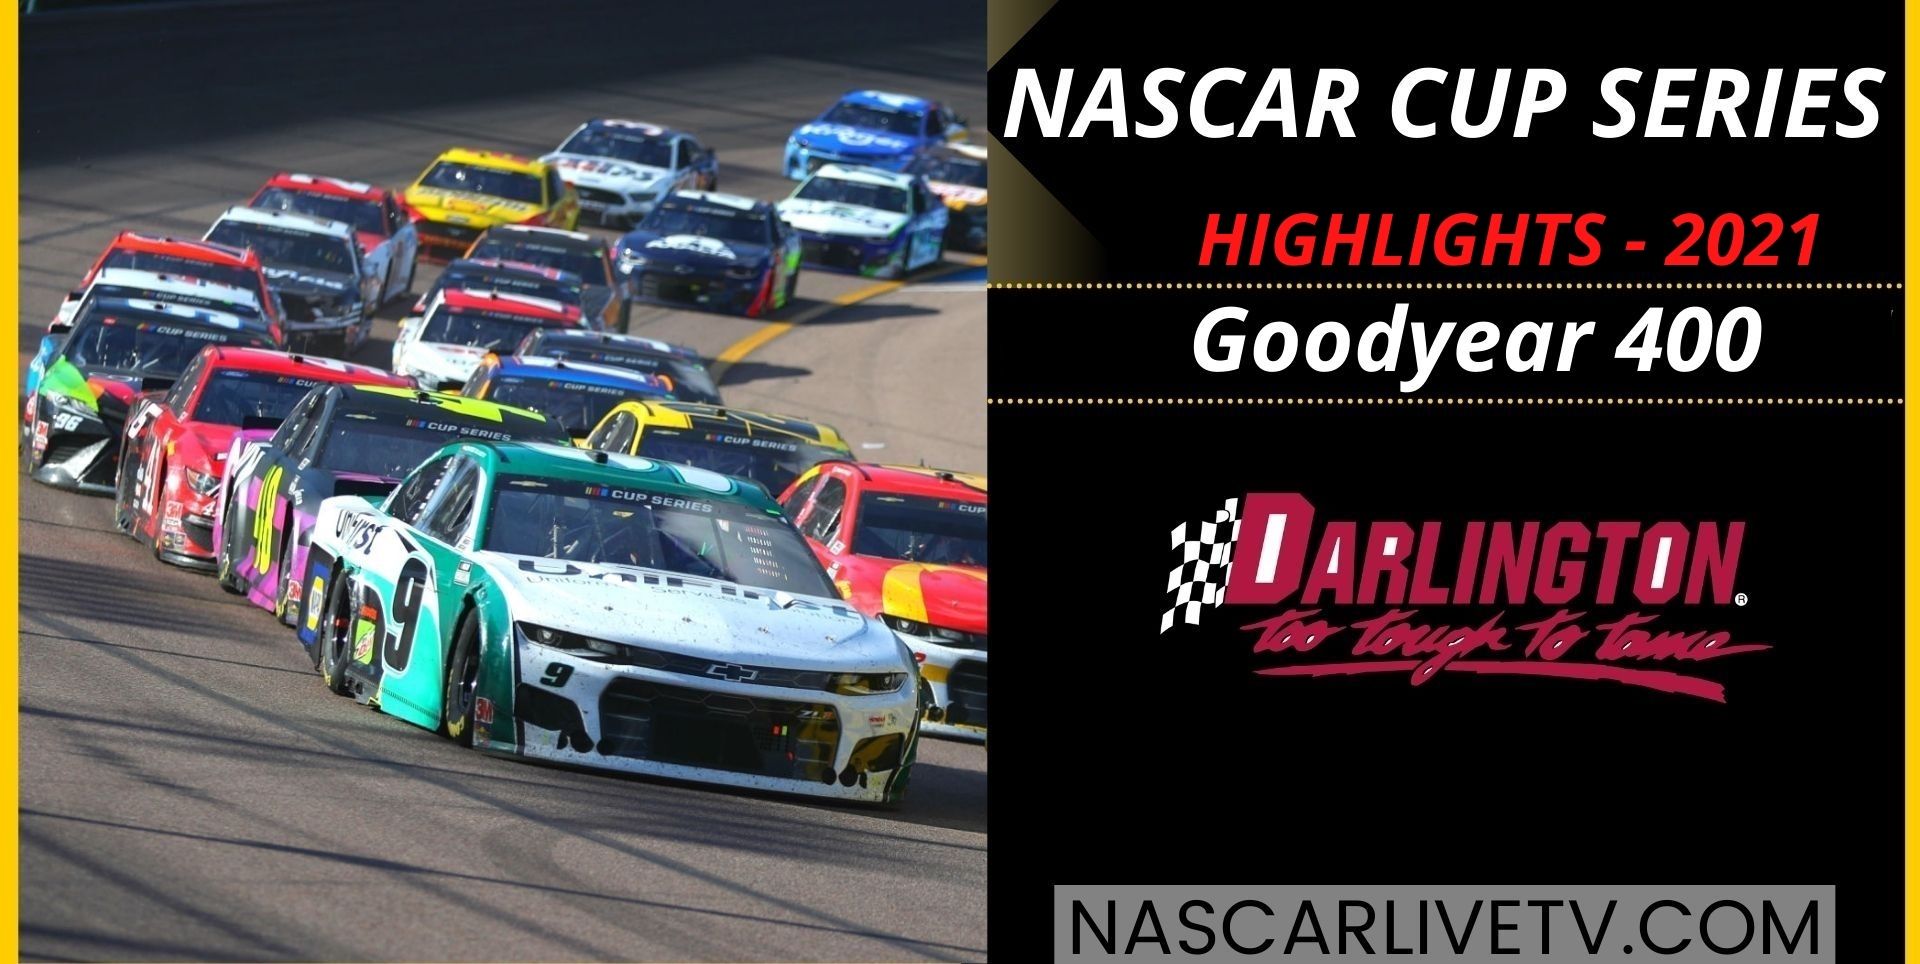 Goodyear 400 NASCAR Cup Series Highlights 2021